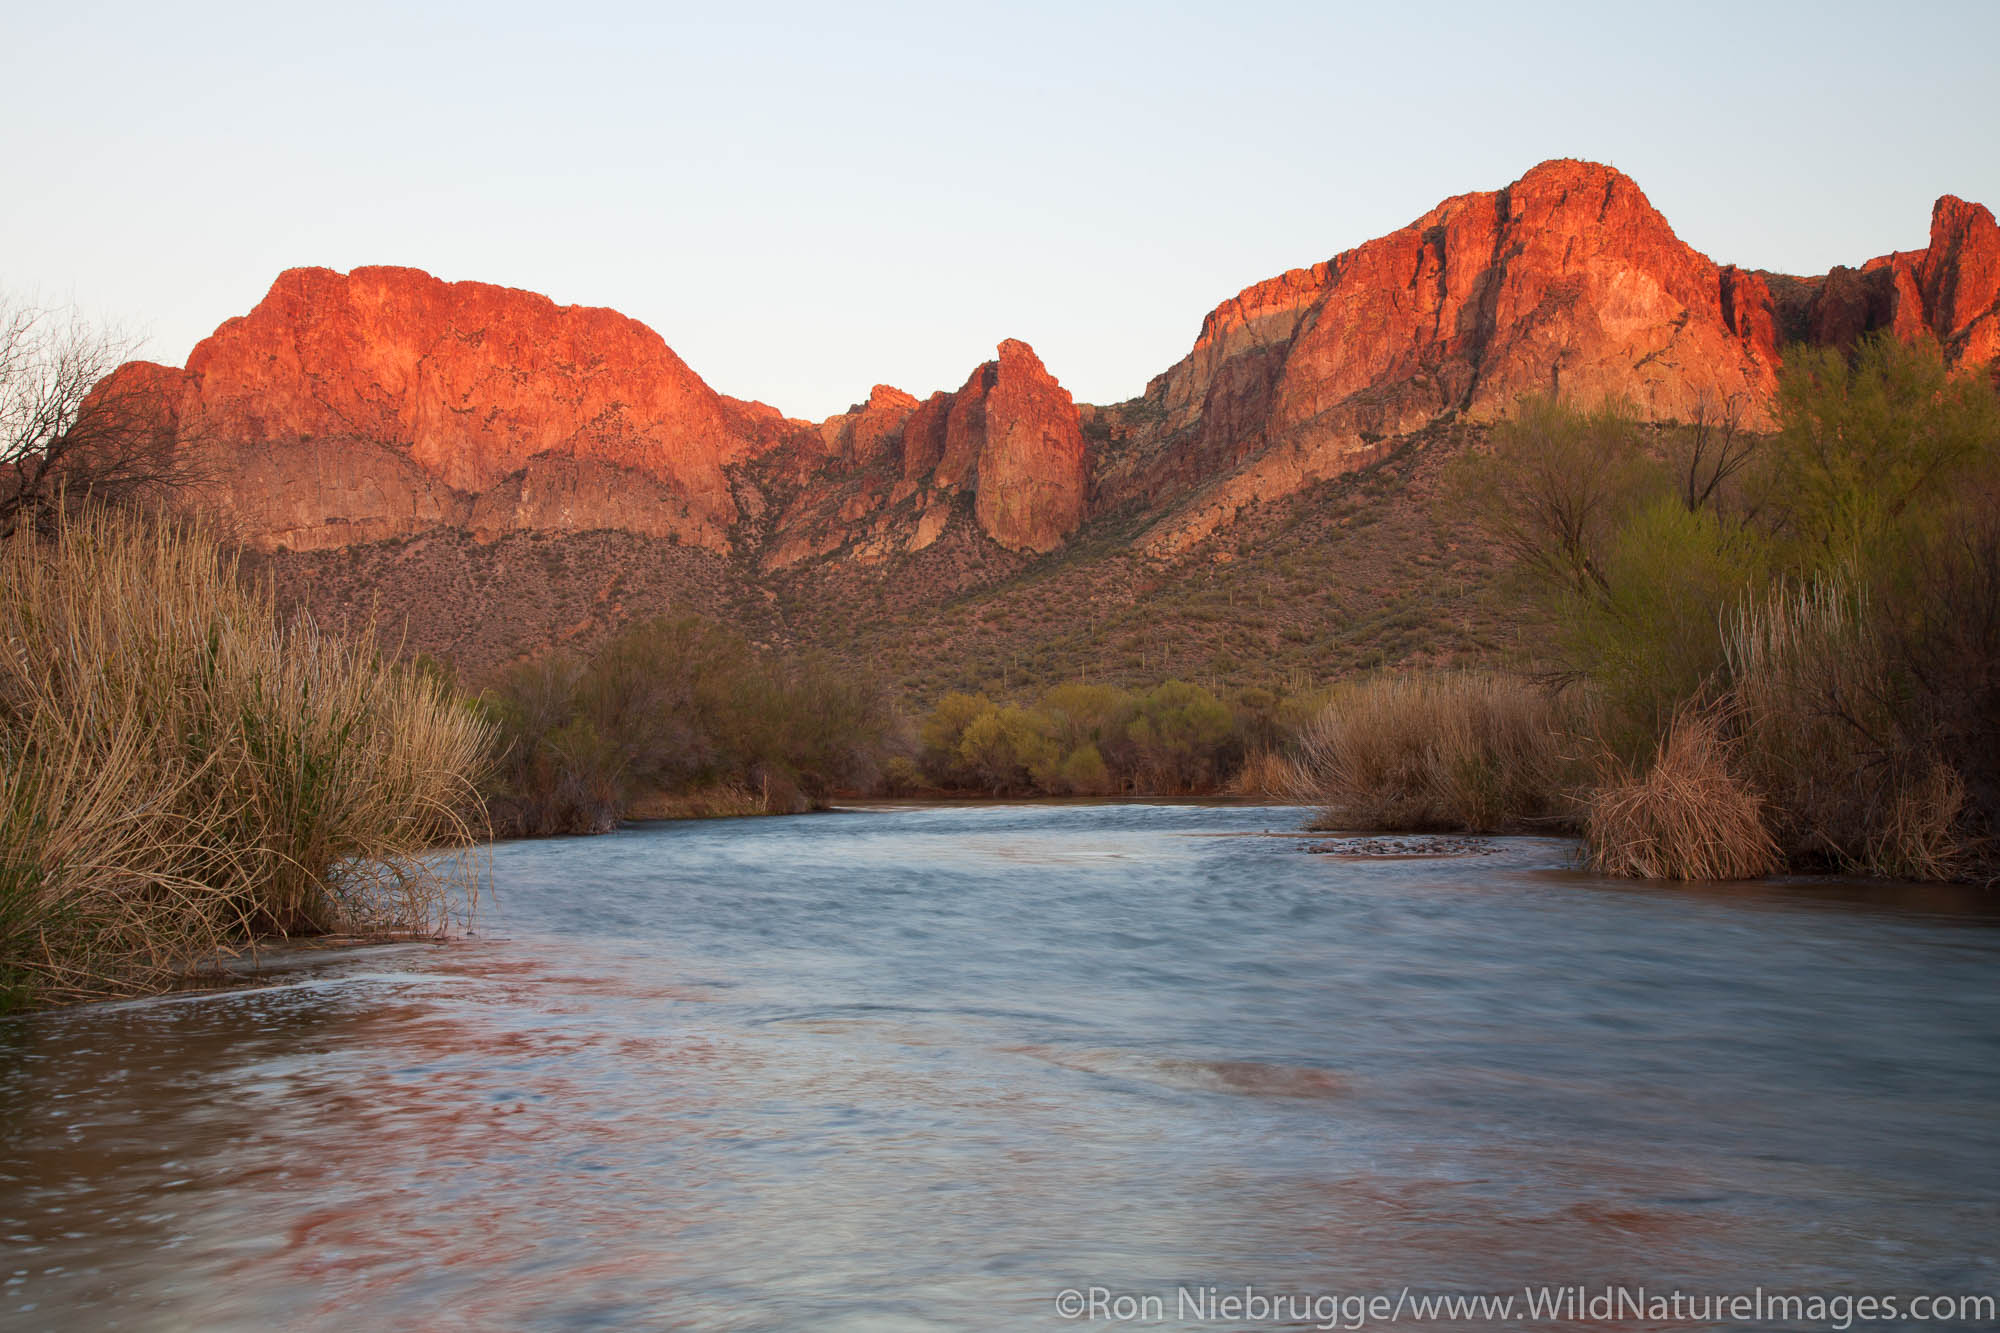 The Salt River, Tonto National Forest, East of Phoenix, Arizona.